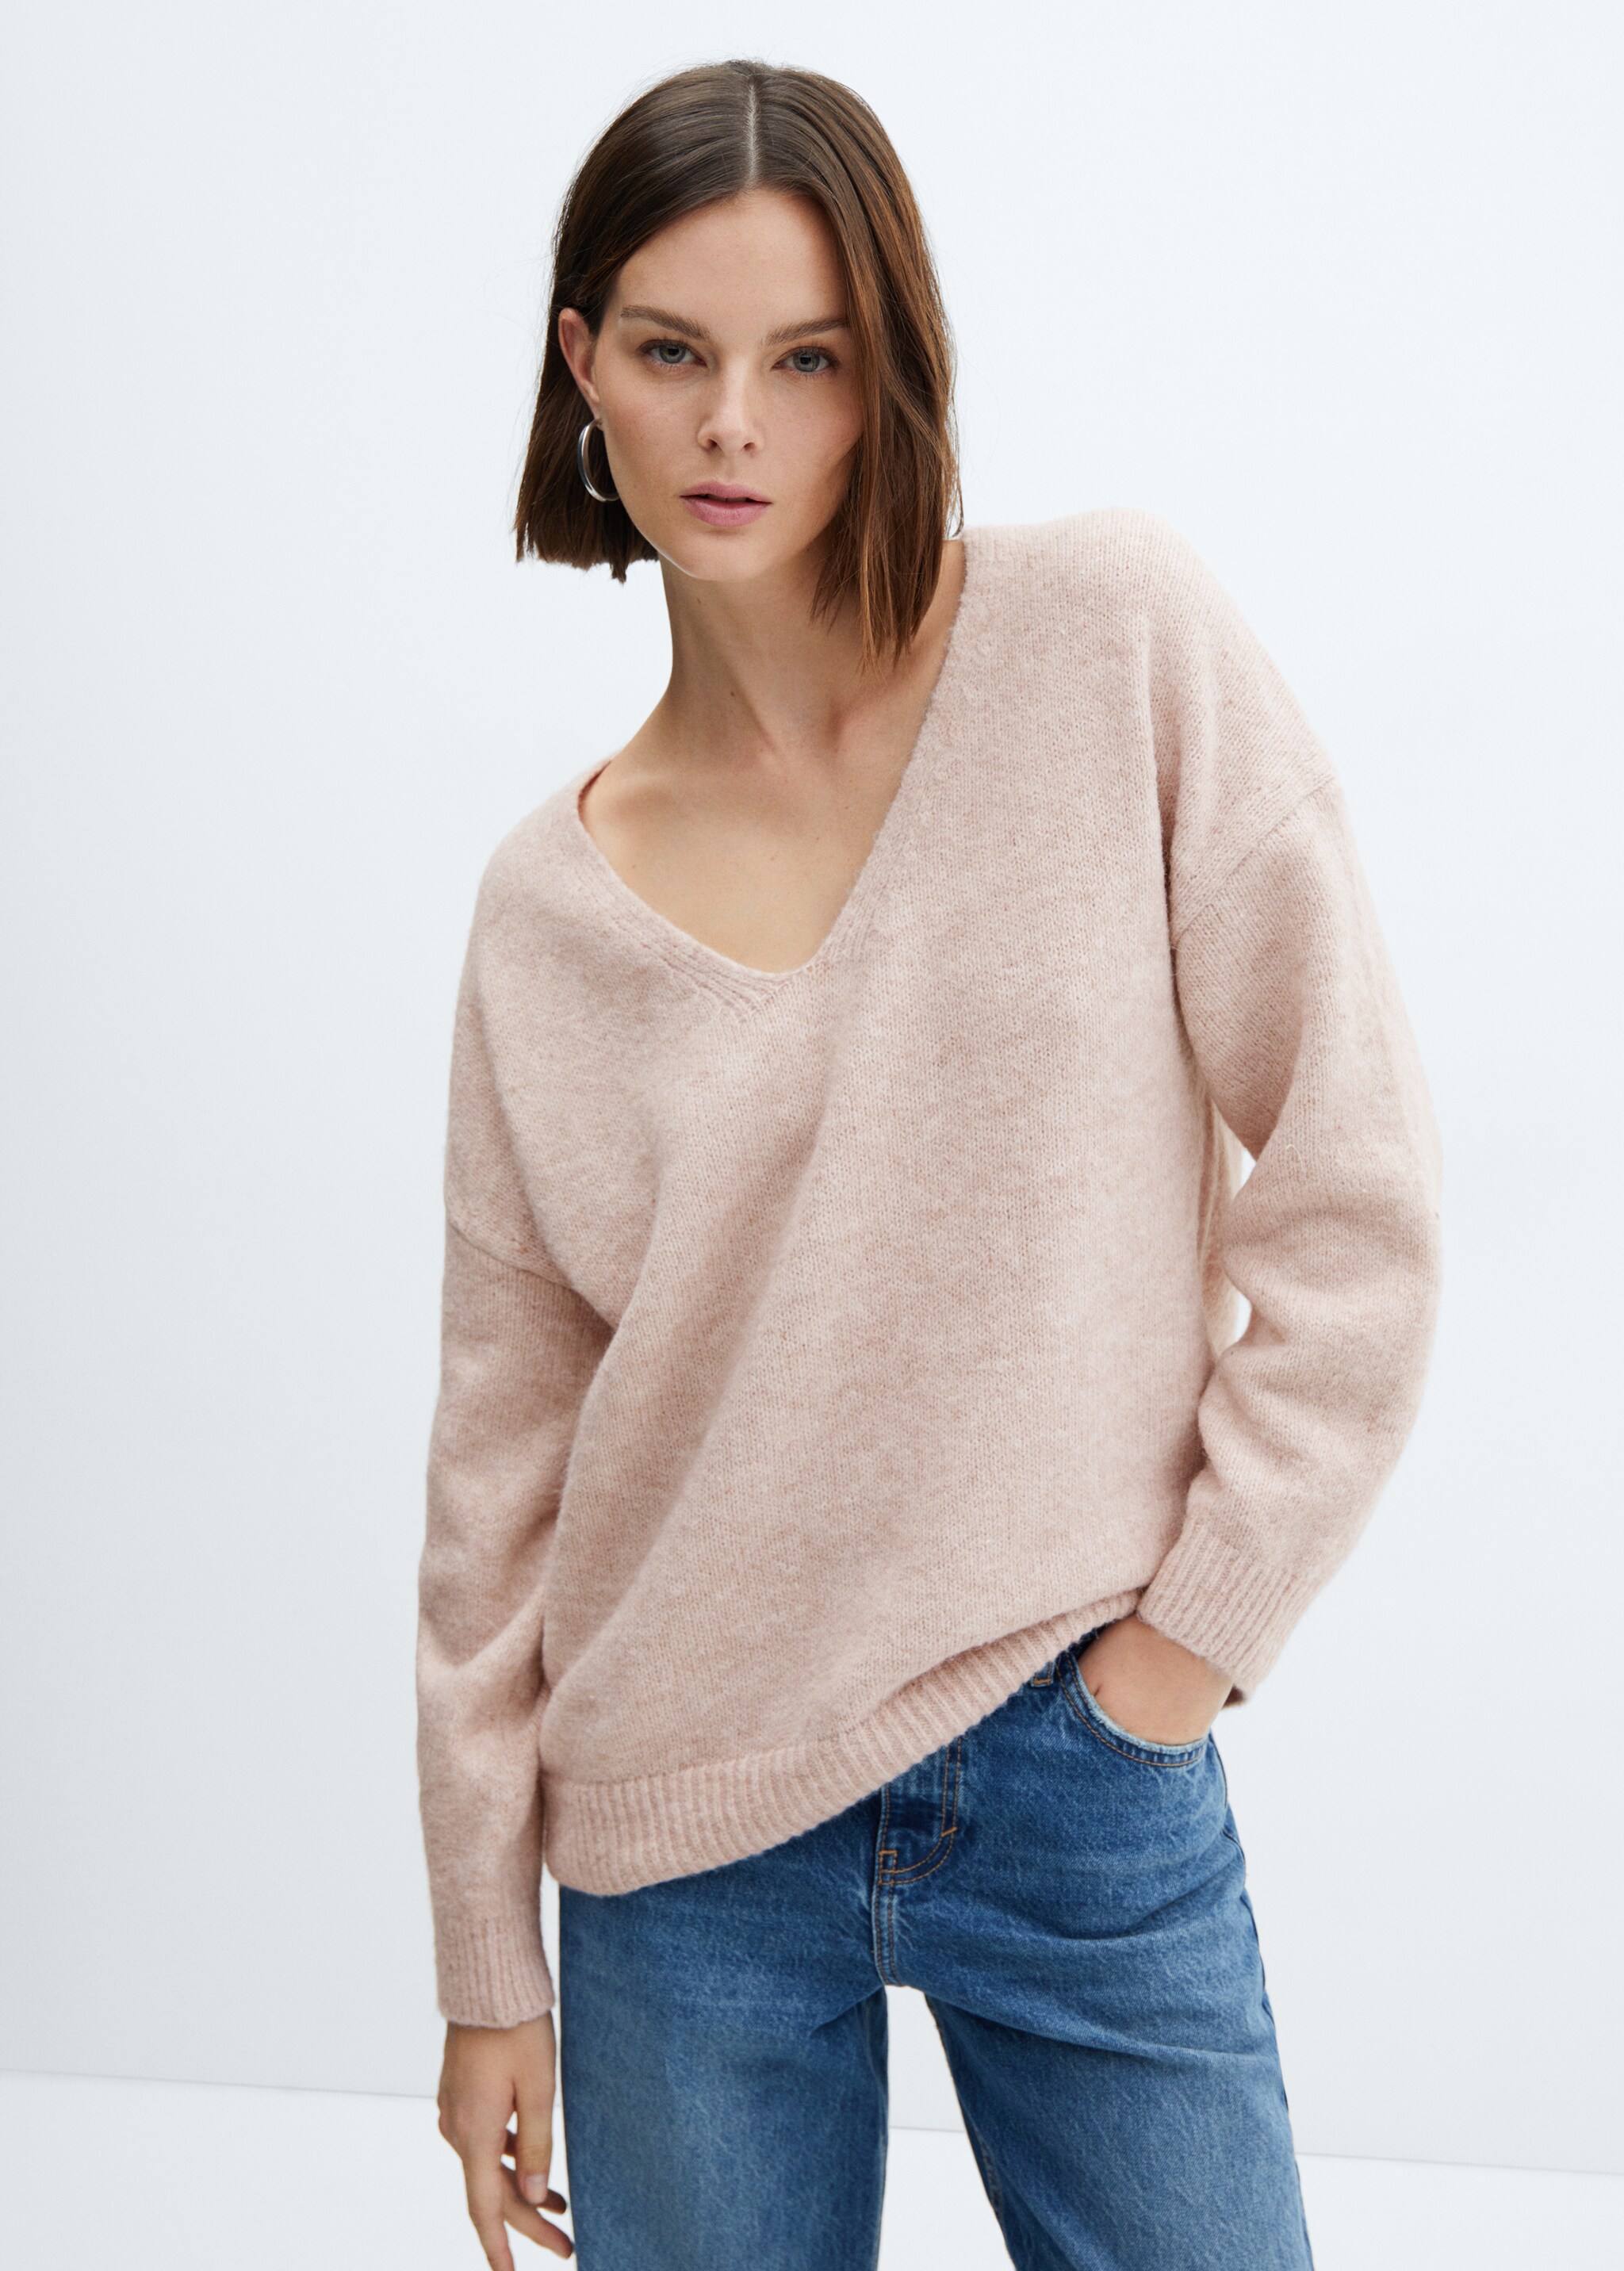 V-neck knit sweater - Medium plane